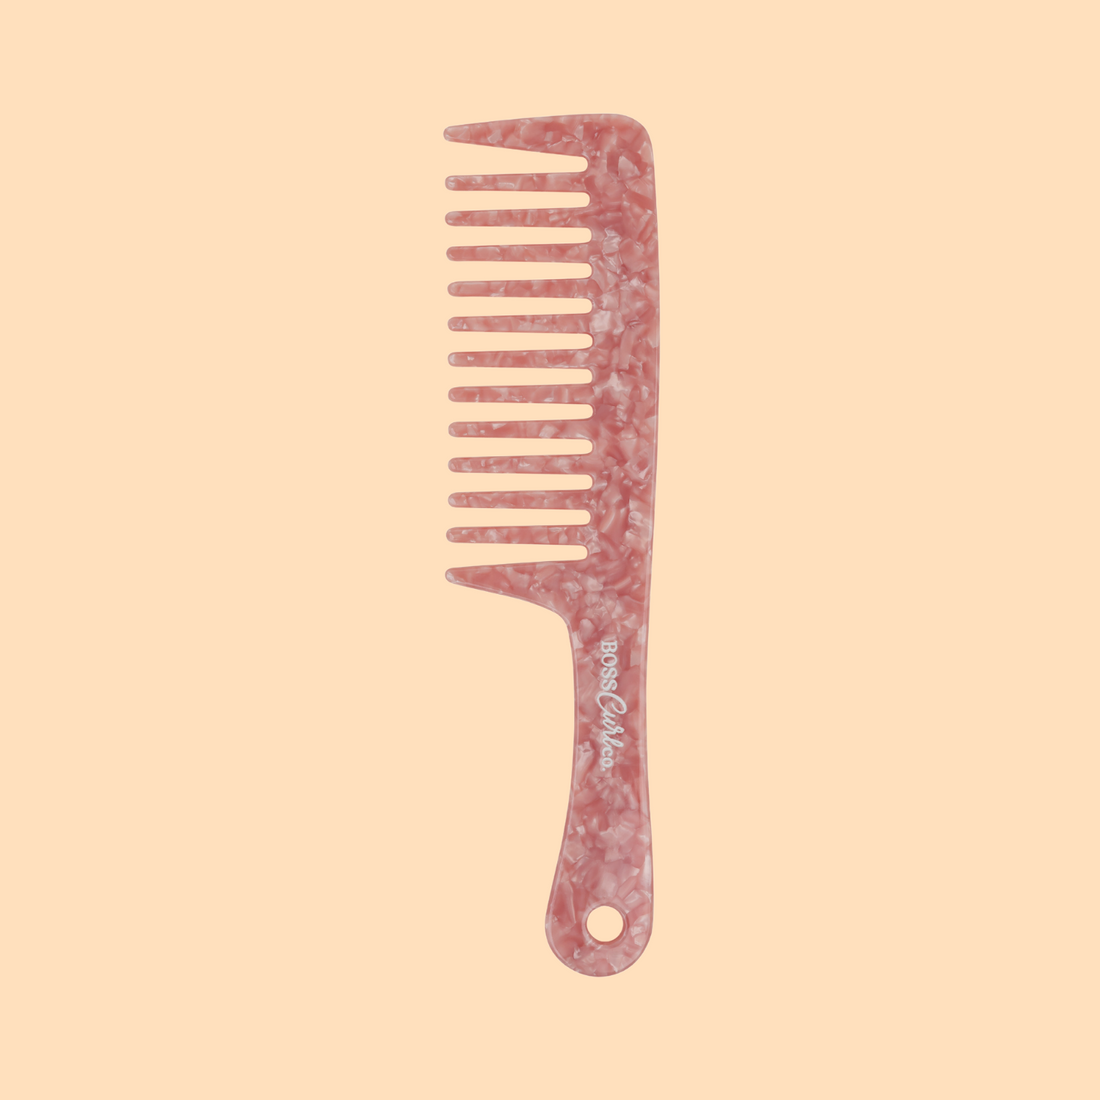 The Distributor Curl Comb